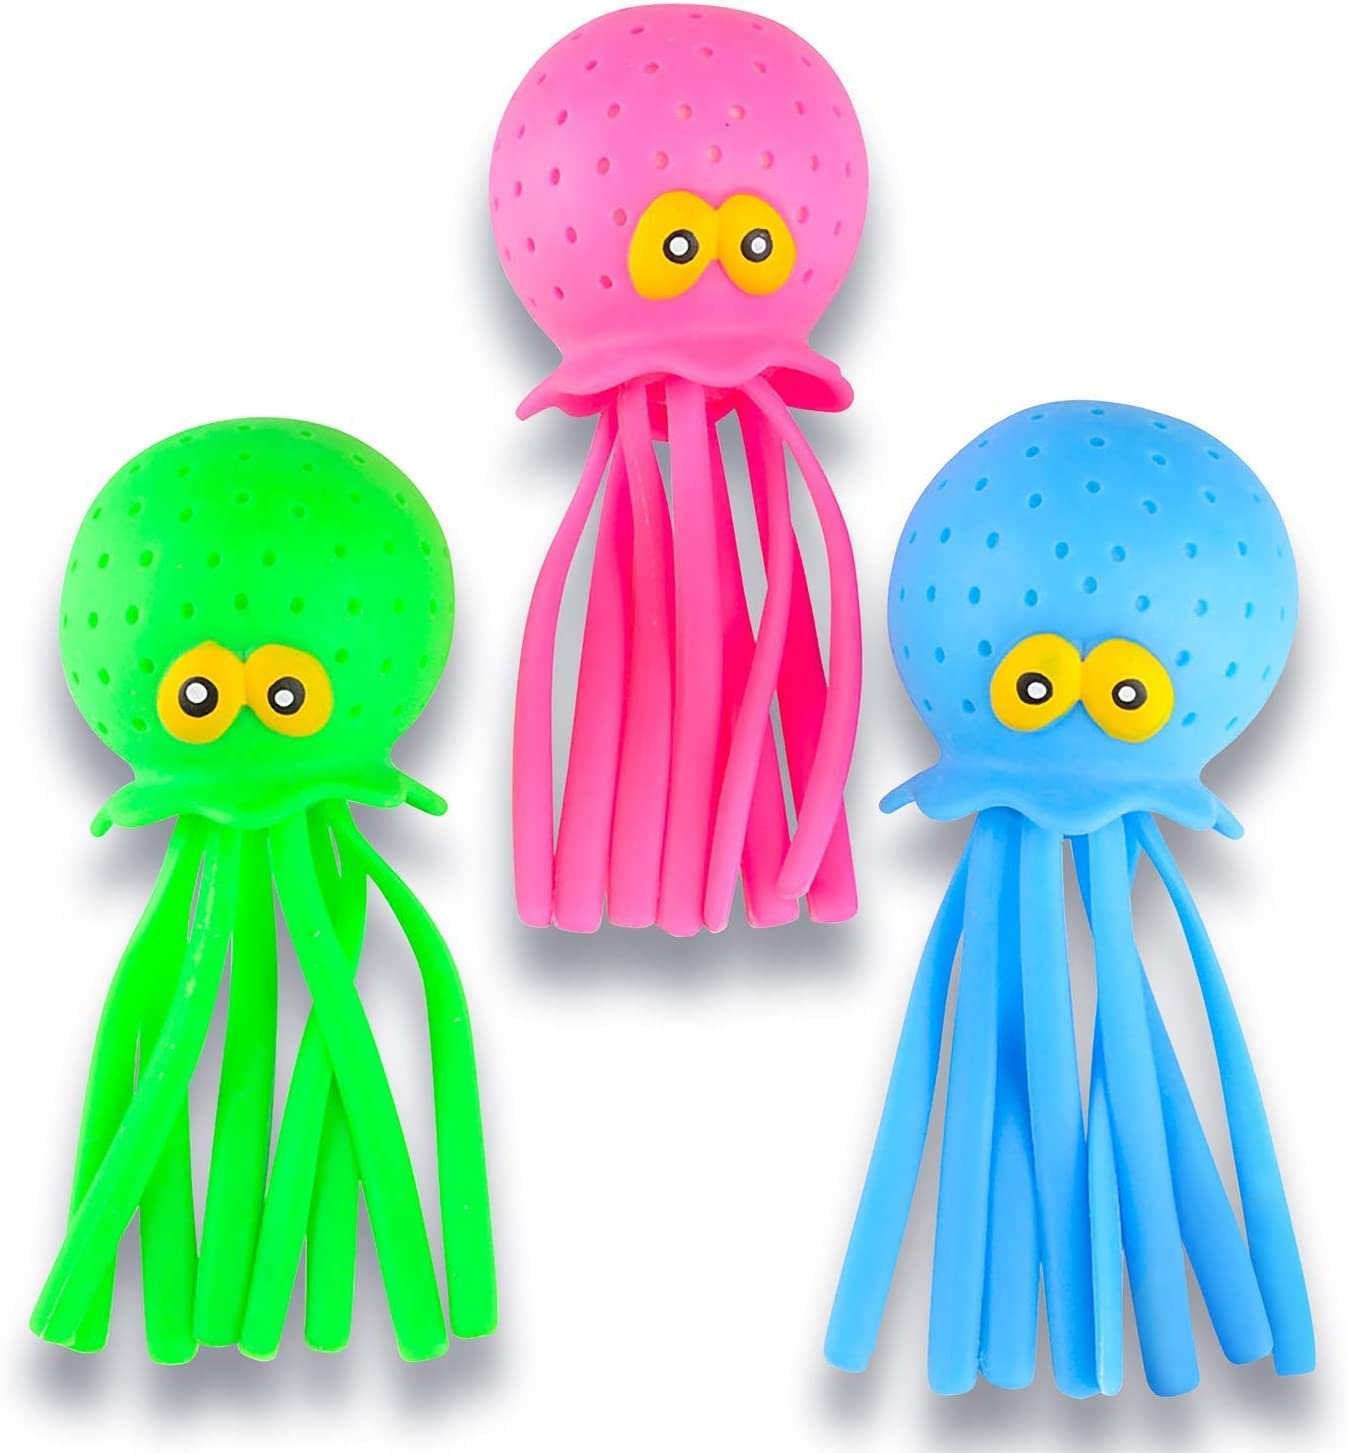 ArtCreativity Octopus Water Balls Rubber Kids Bath Pool Toys, Set of 3, Pink